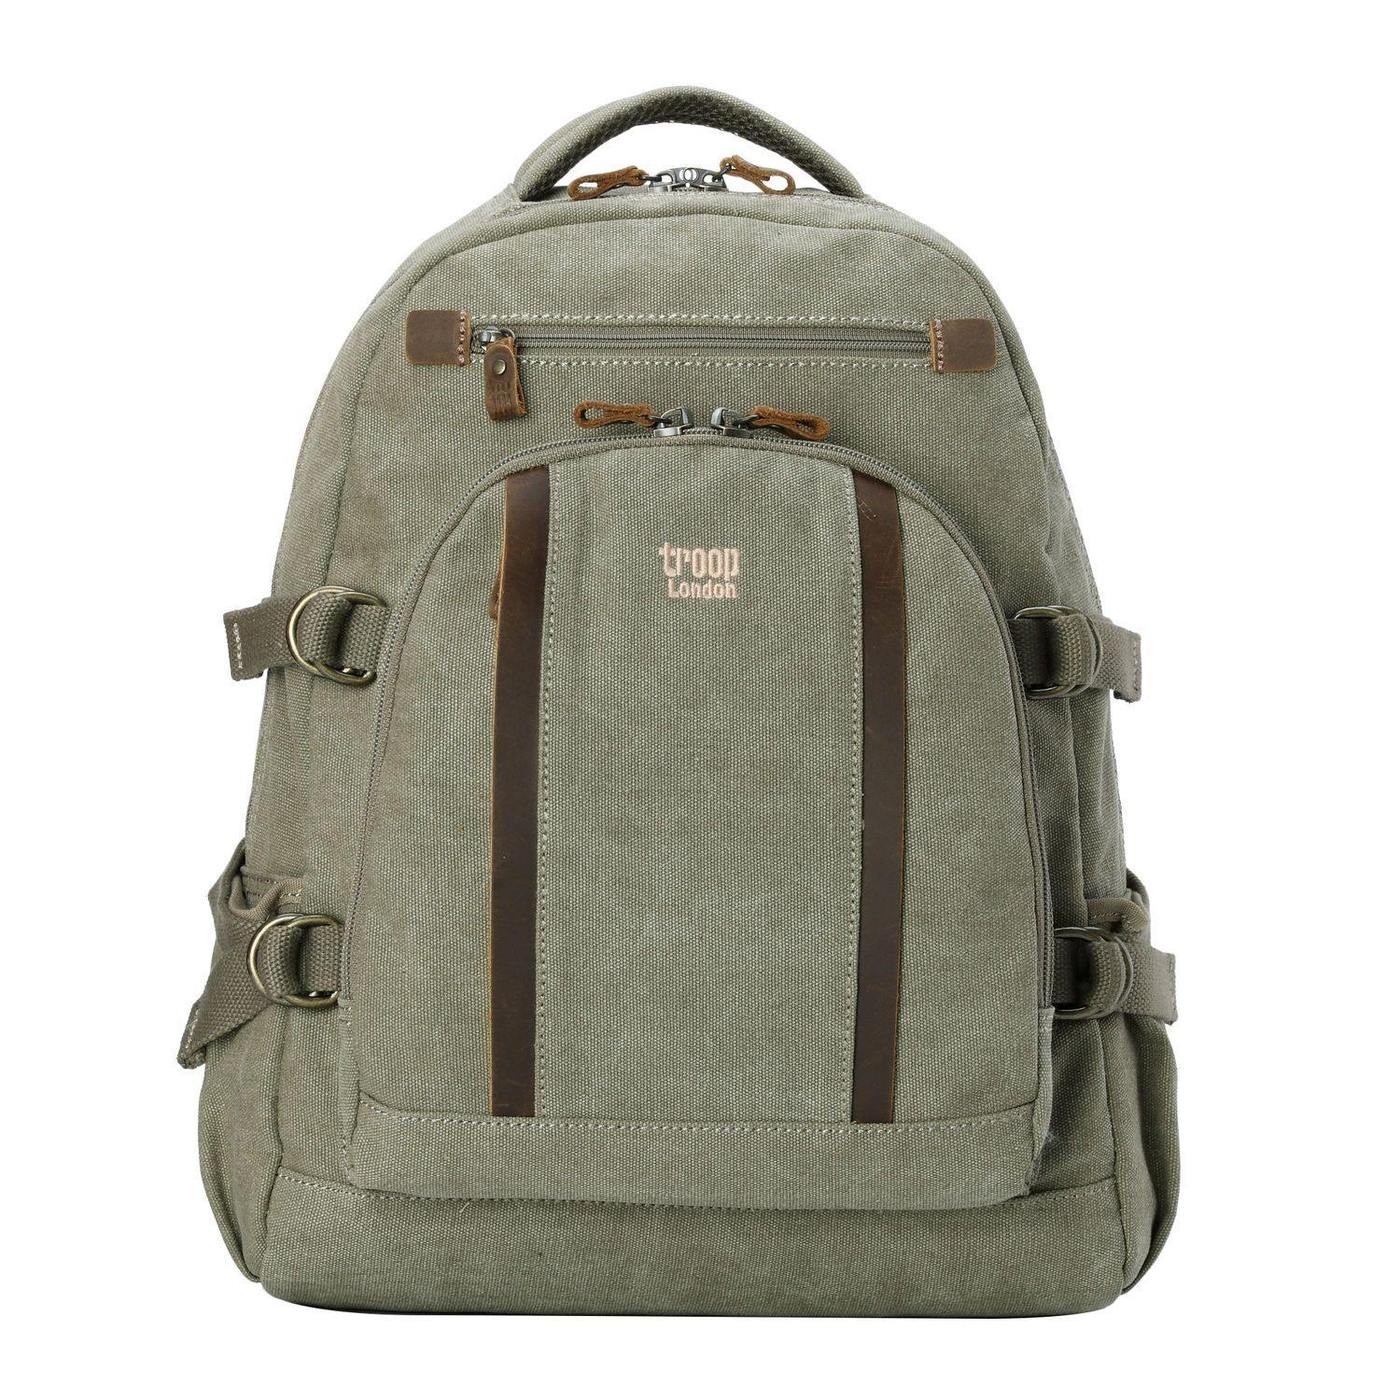 Medium Classic Canvass Backpack